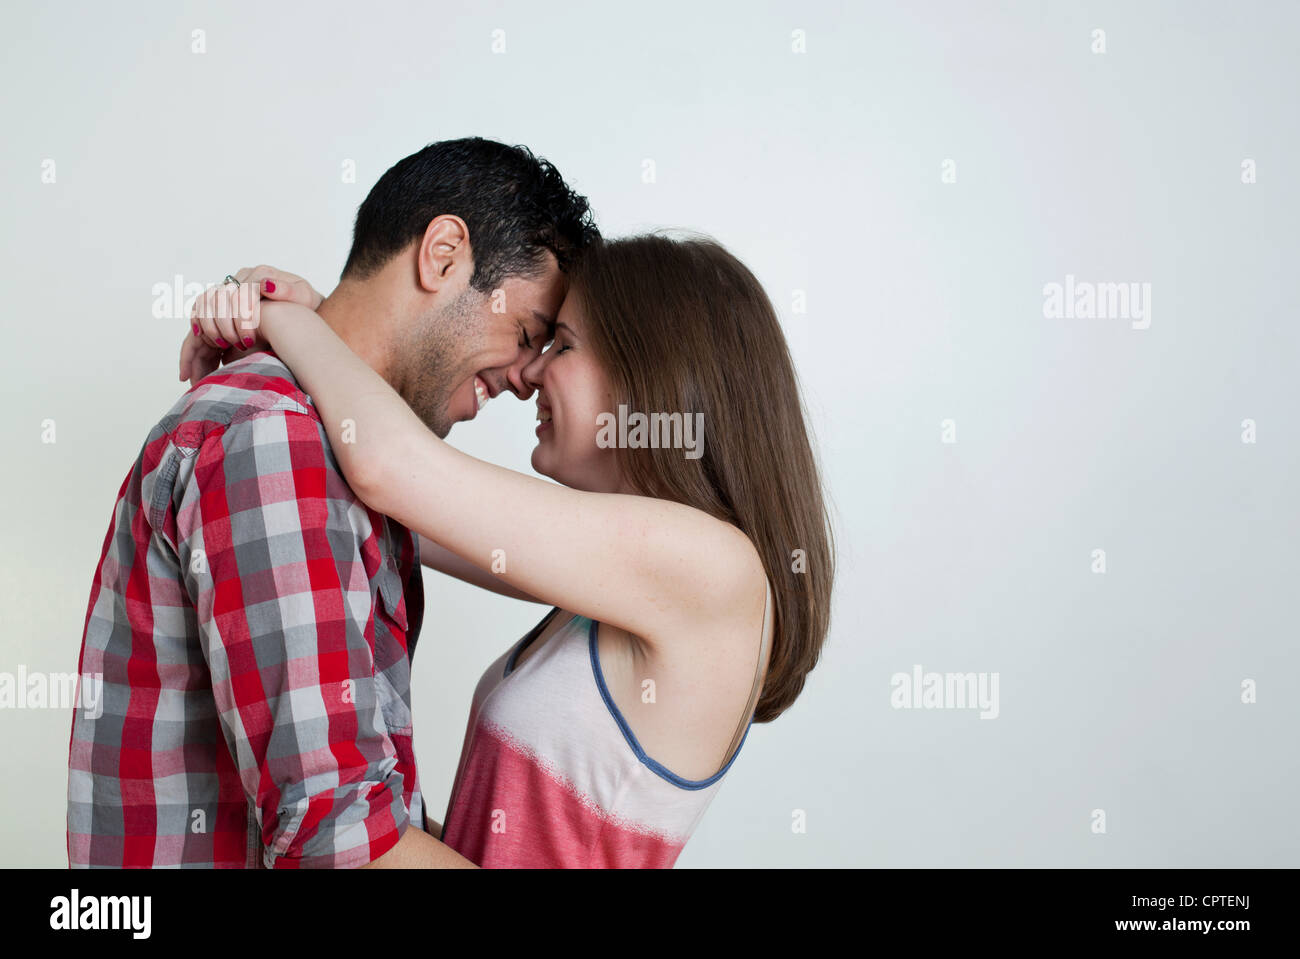 Young couple embracing, studio shot Stock Photo